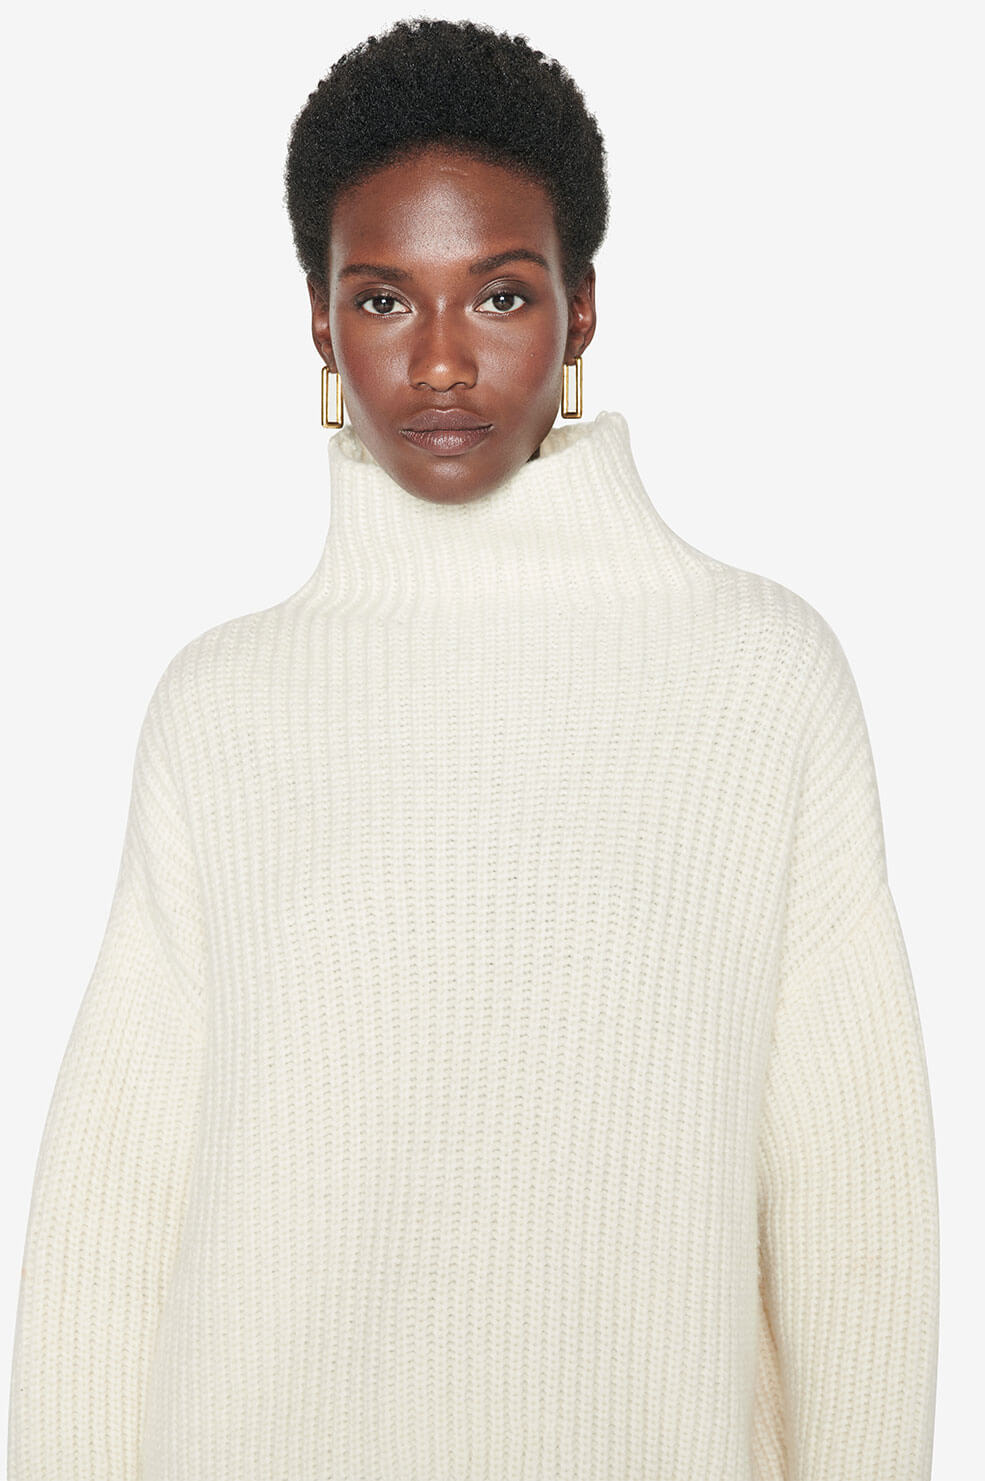 Anine Bing - Sydney Sweater in Cream